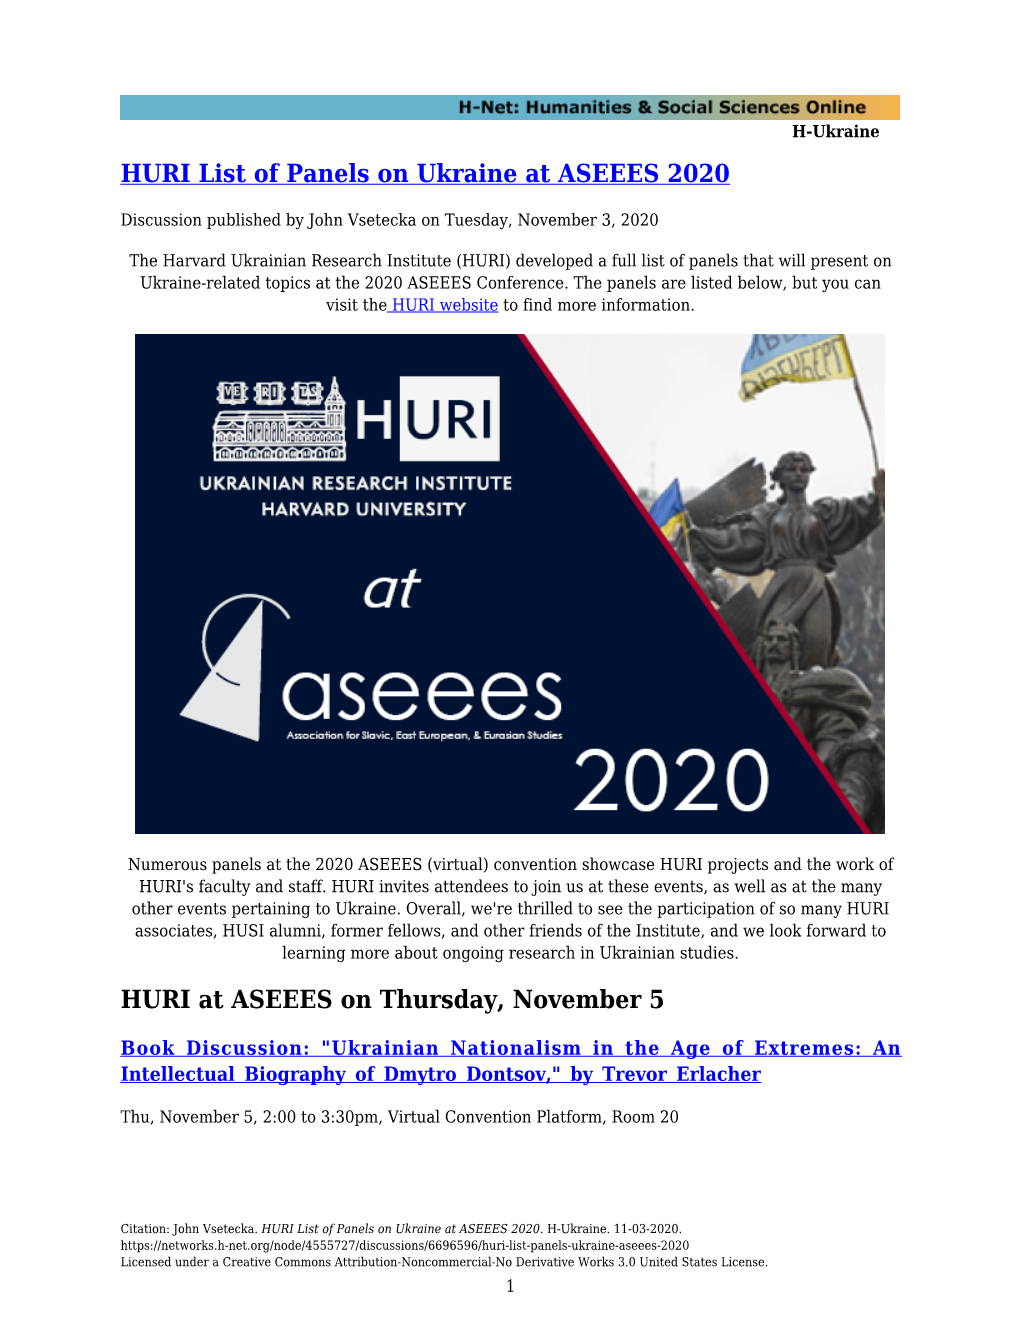 HURI List of Panels on Ukraine at ASEEES 2020 HURI at ASEEES On